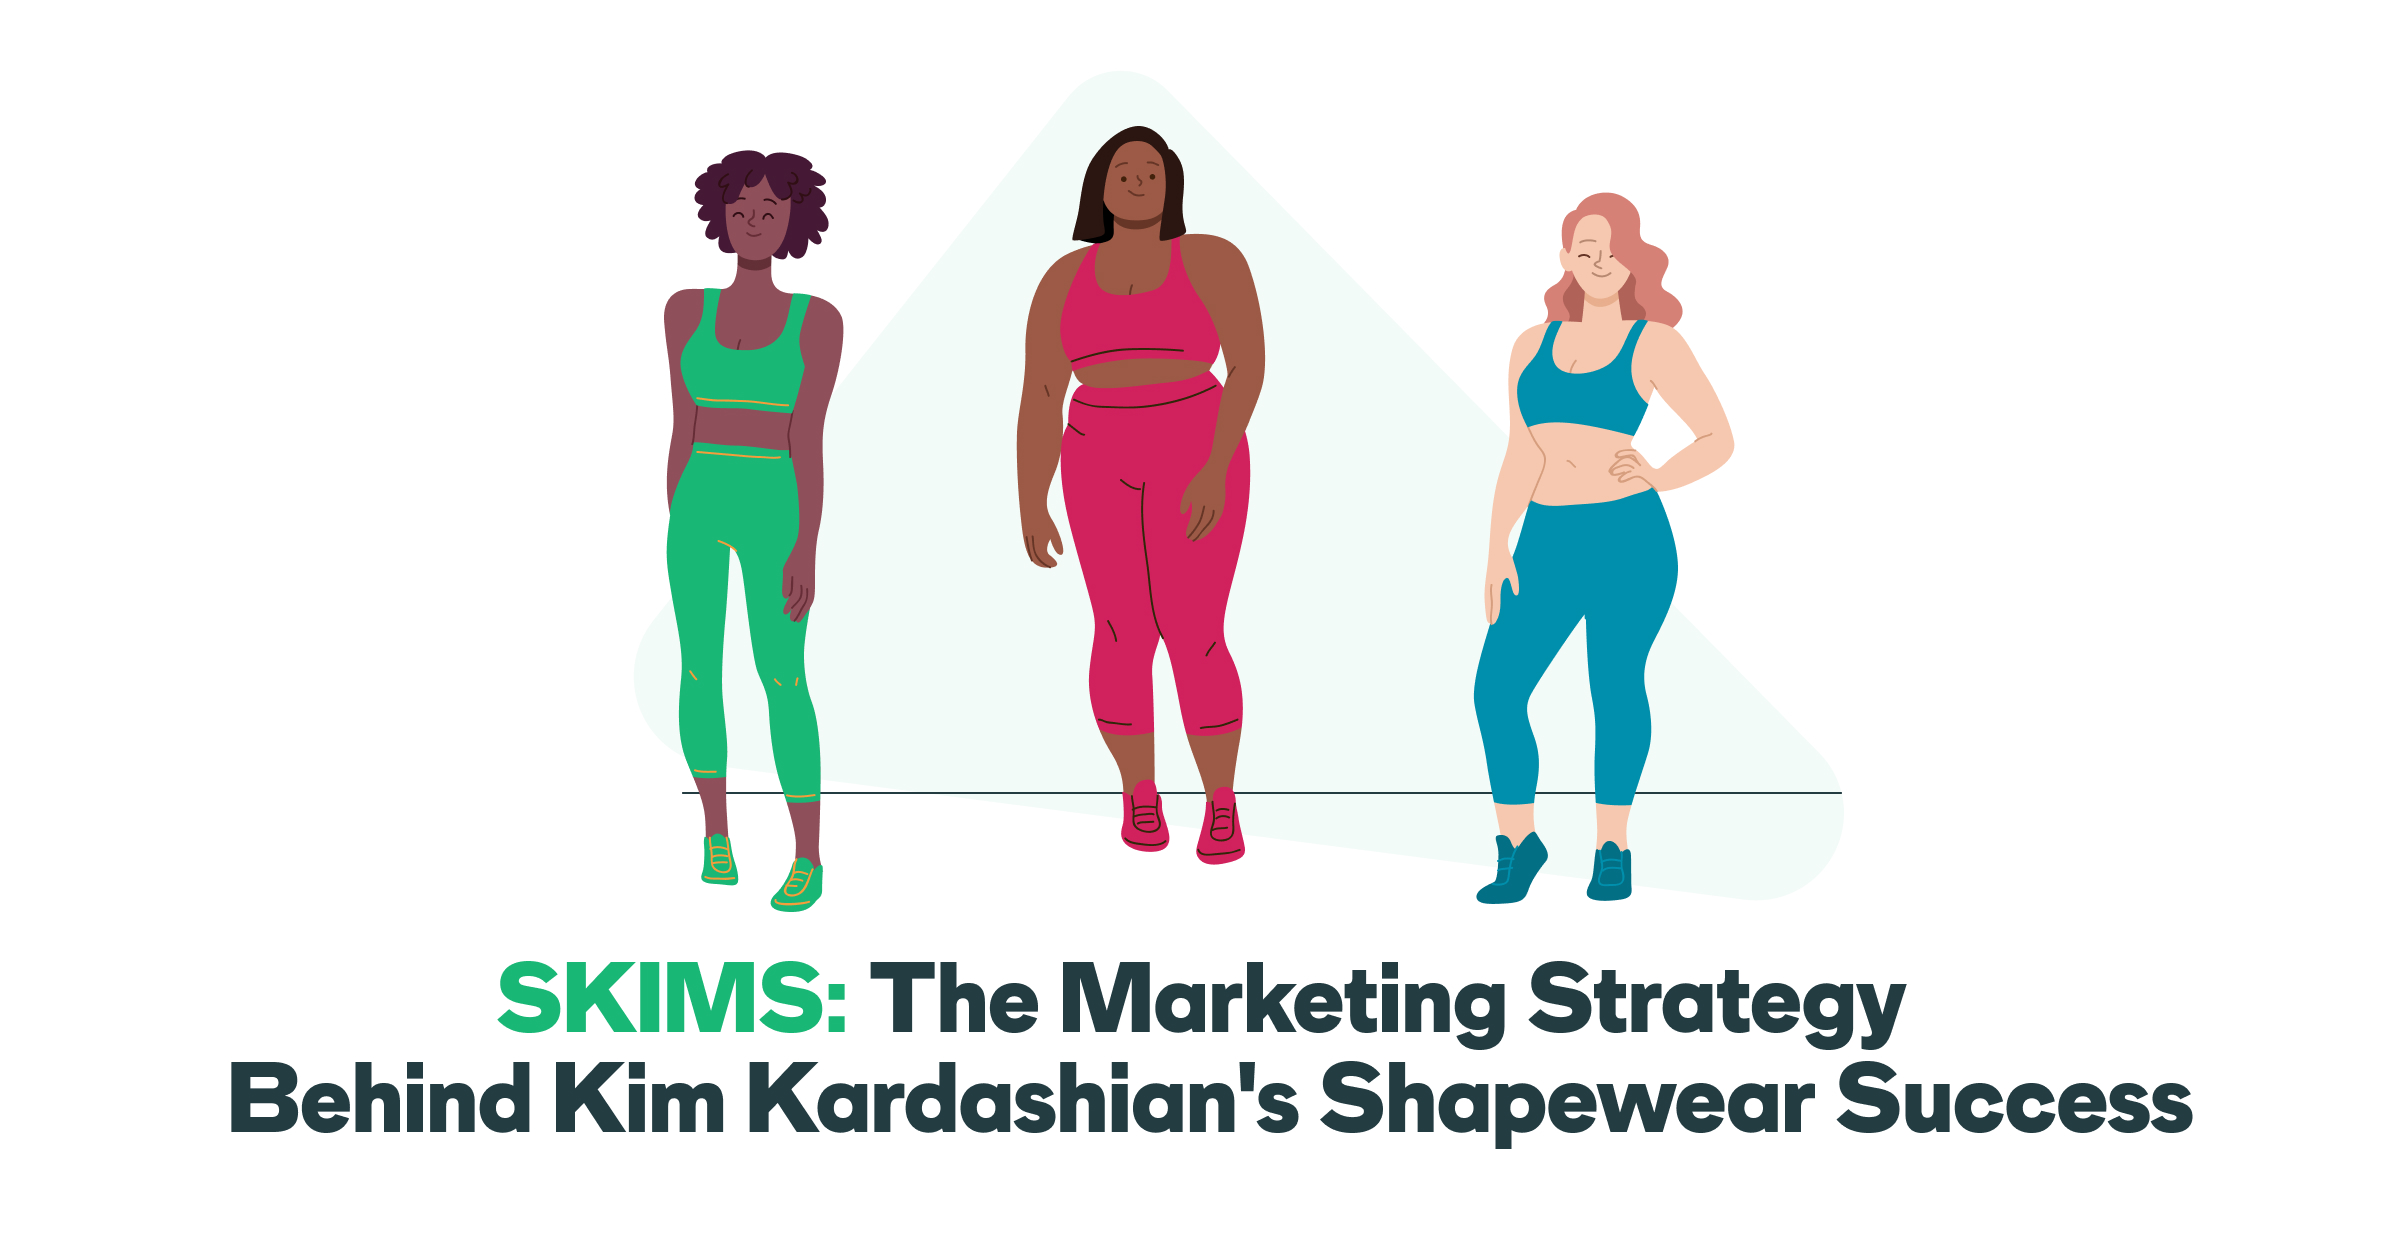 Kim Kardashian 'solutionwear' brand Skims to launch in stores across the US